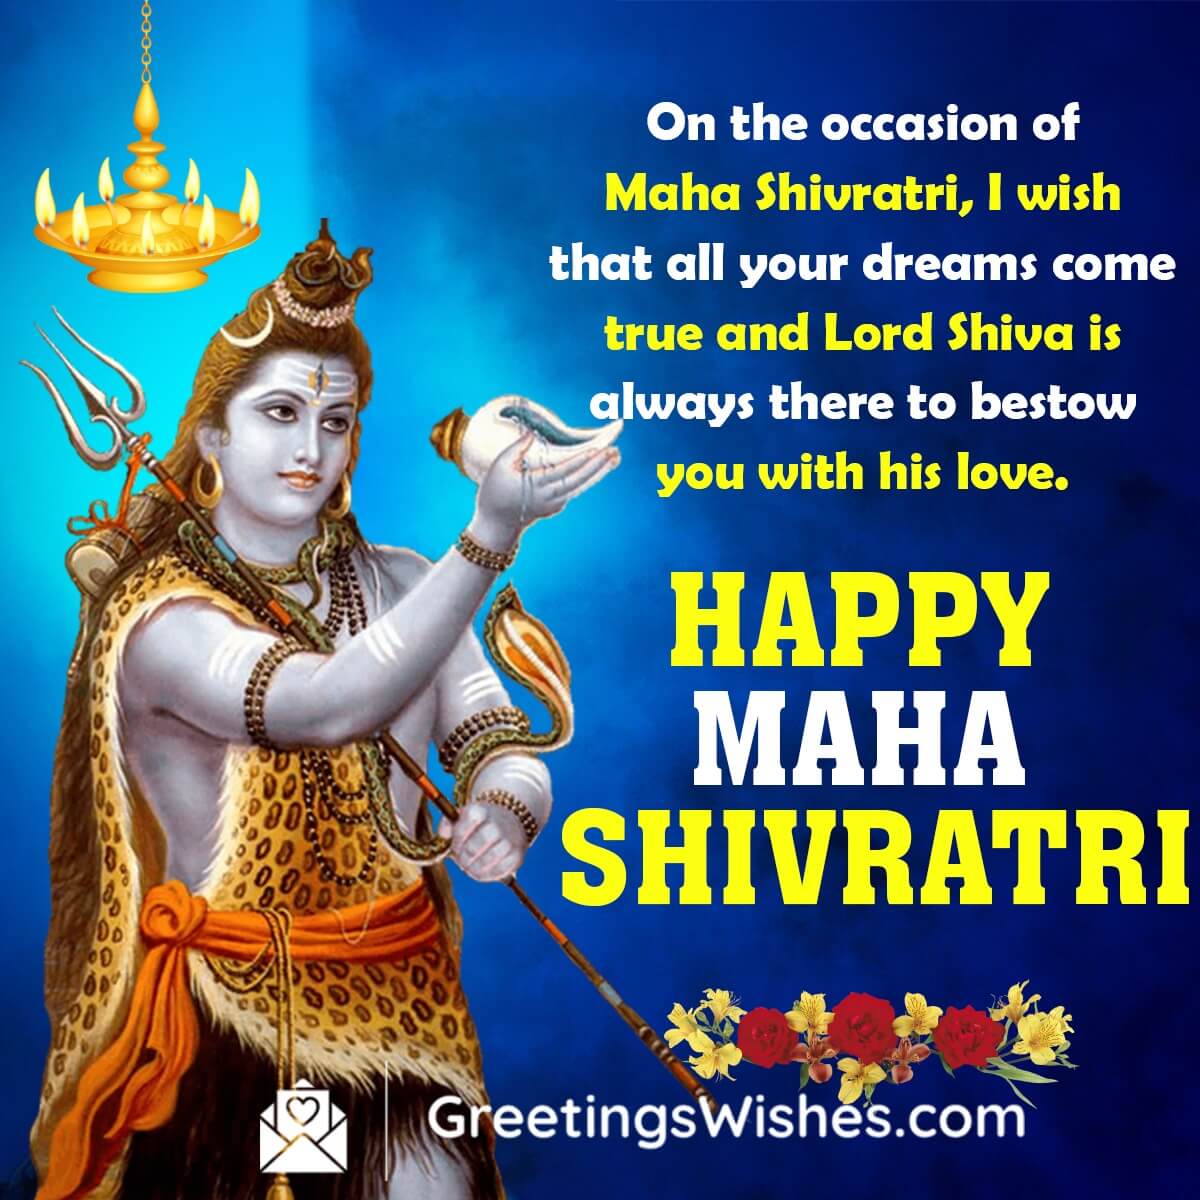 Happy Maha Shivratri Wish Image